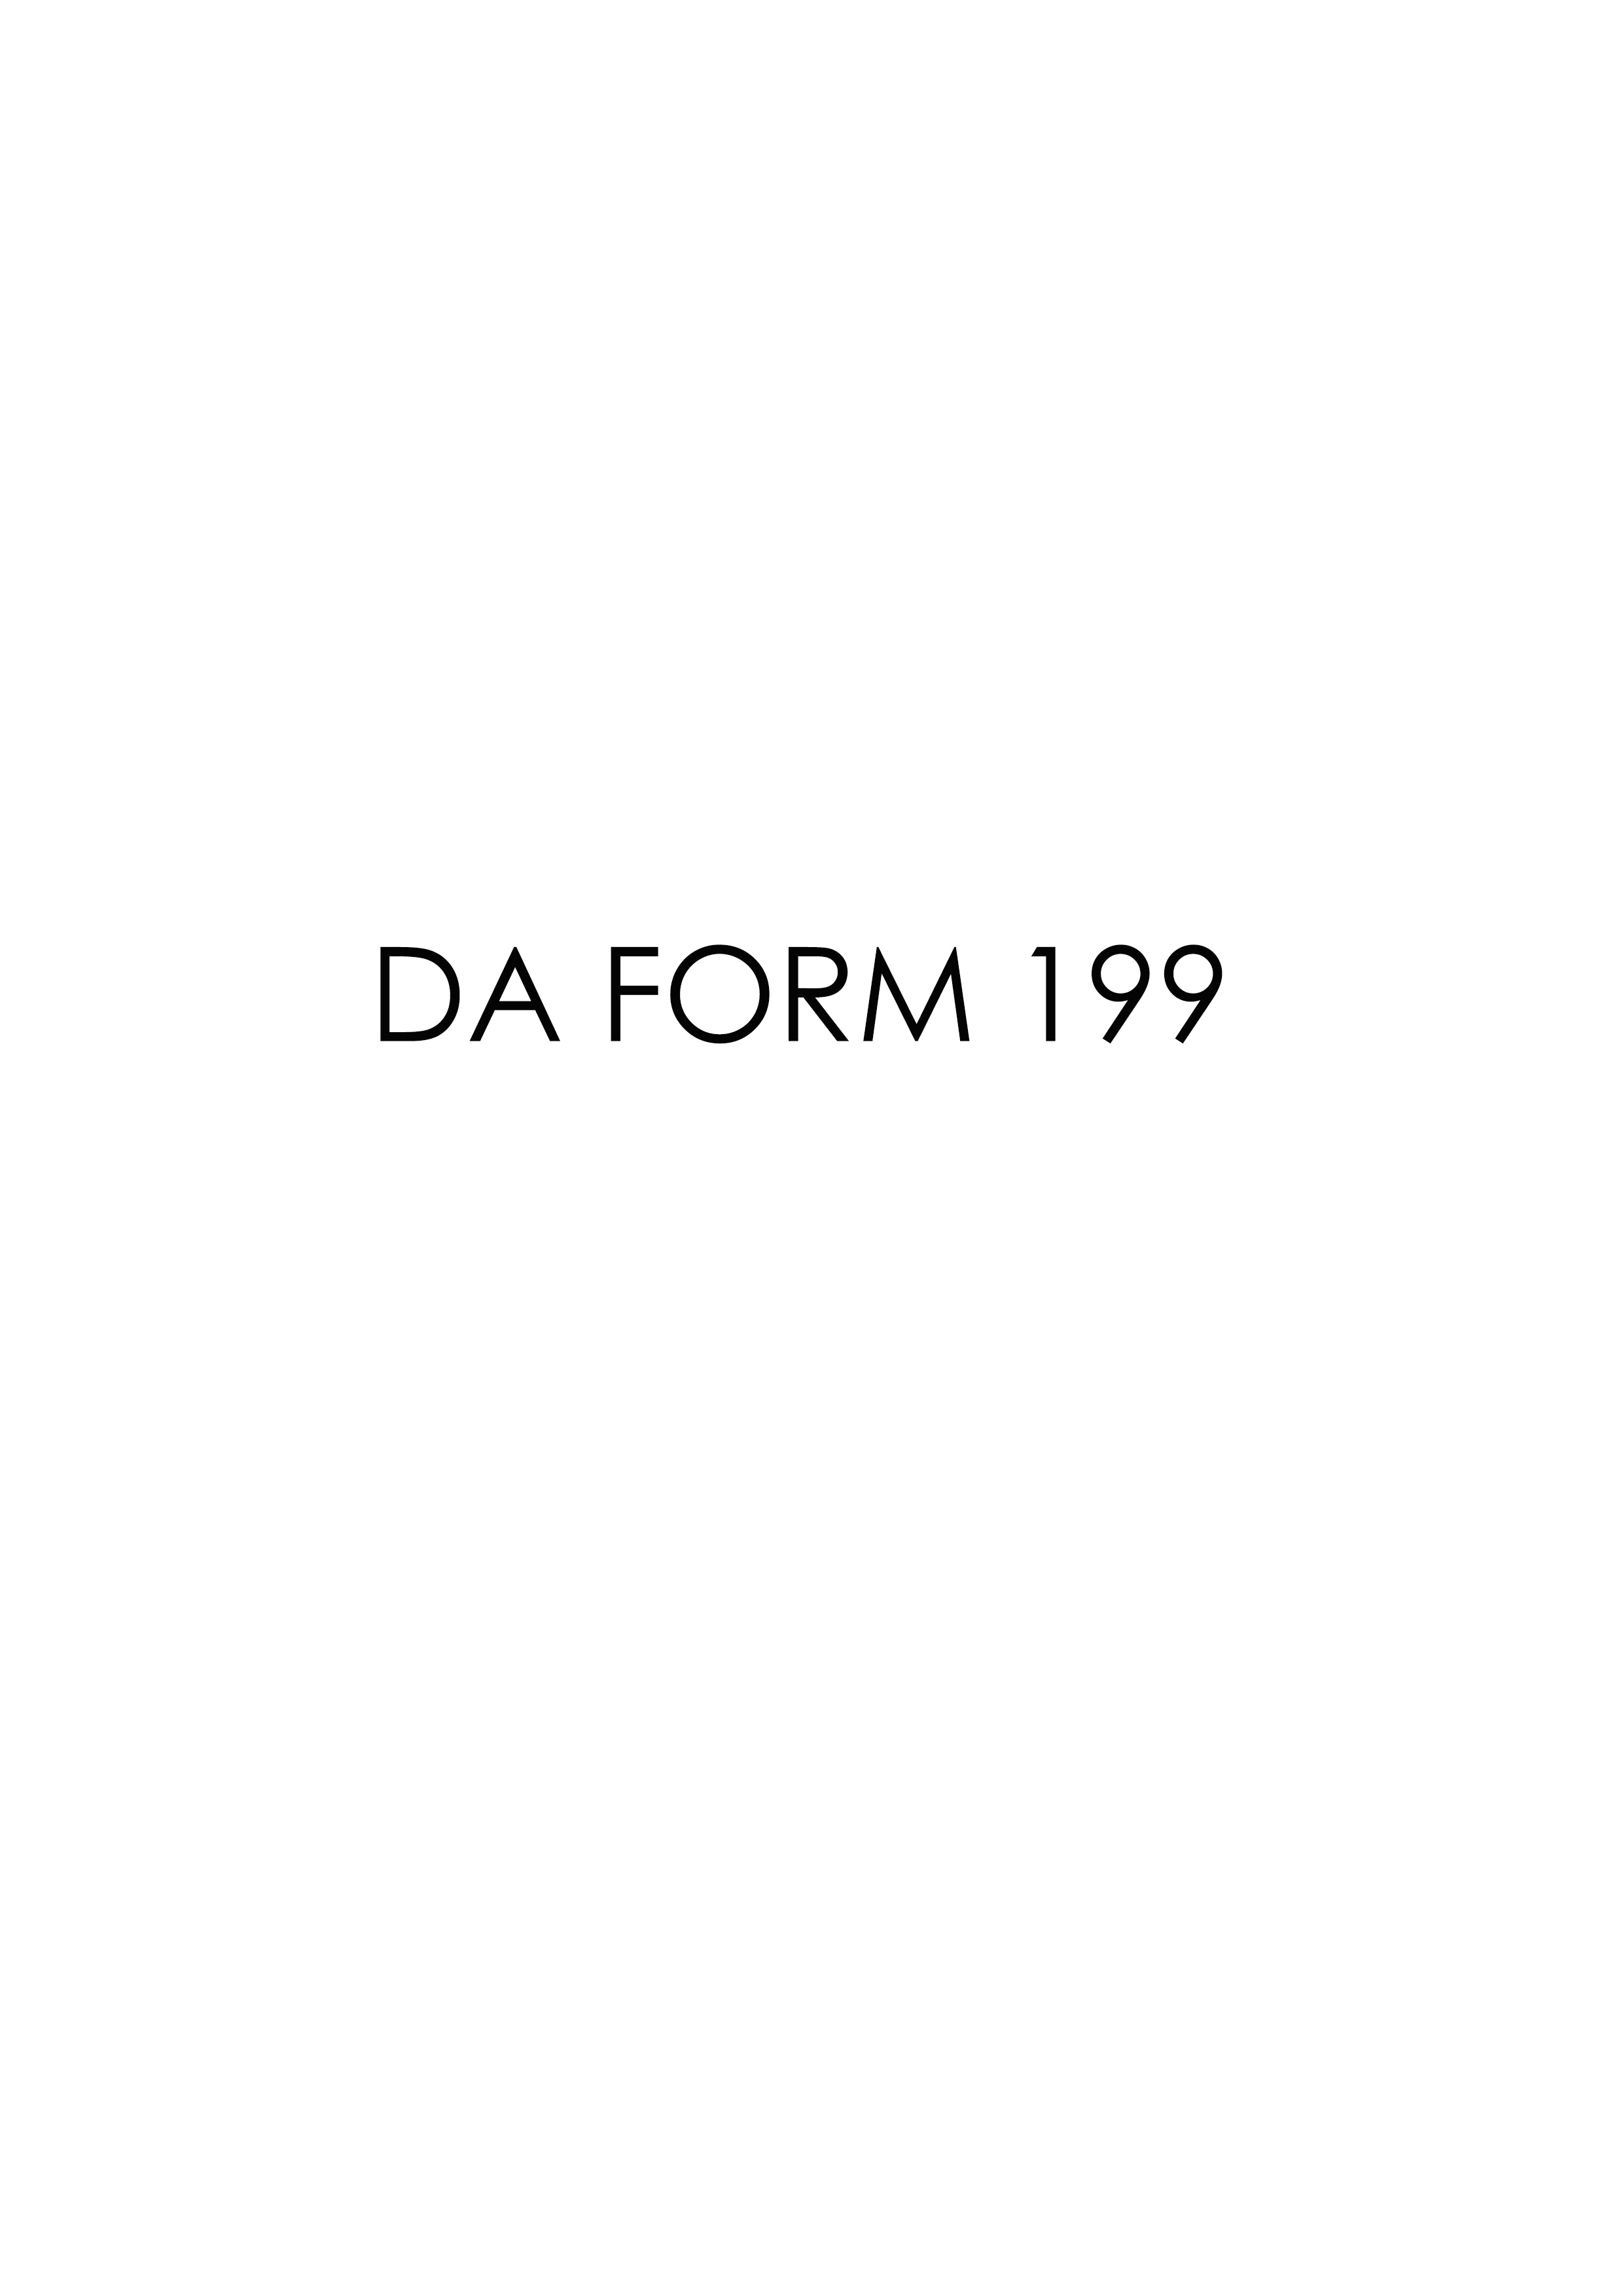 Download da 199 Form Free